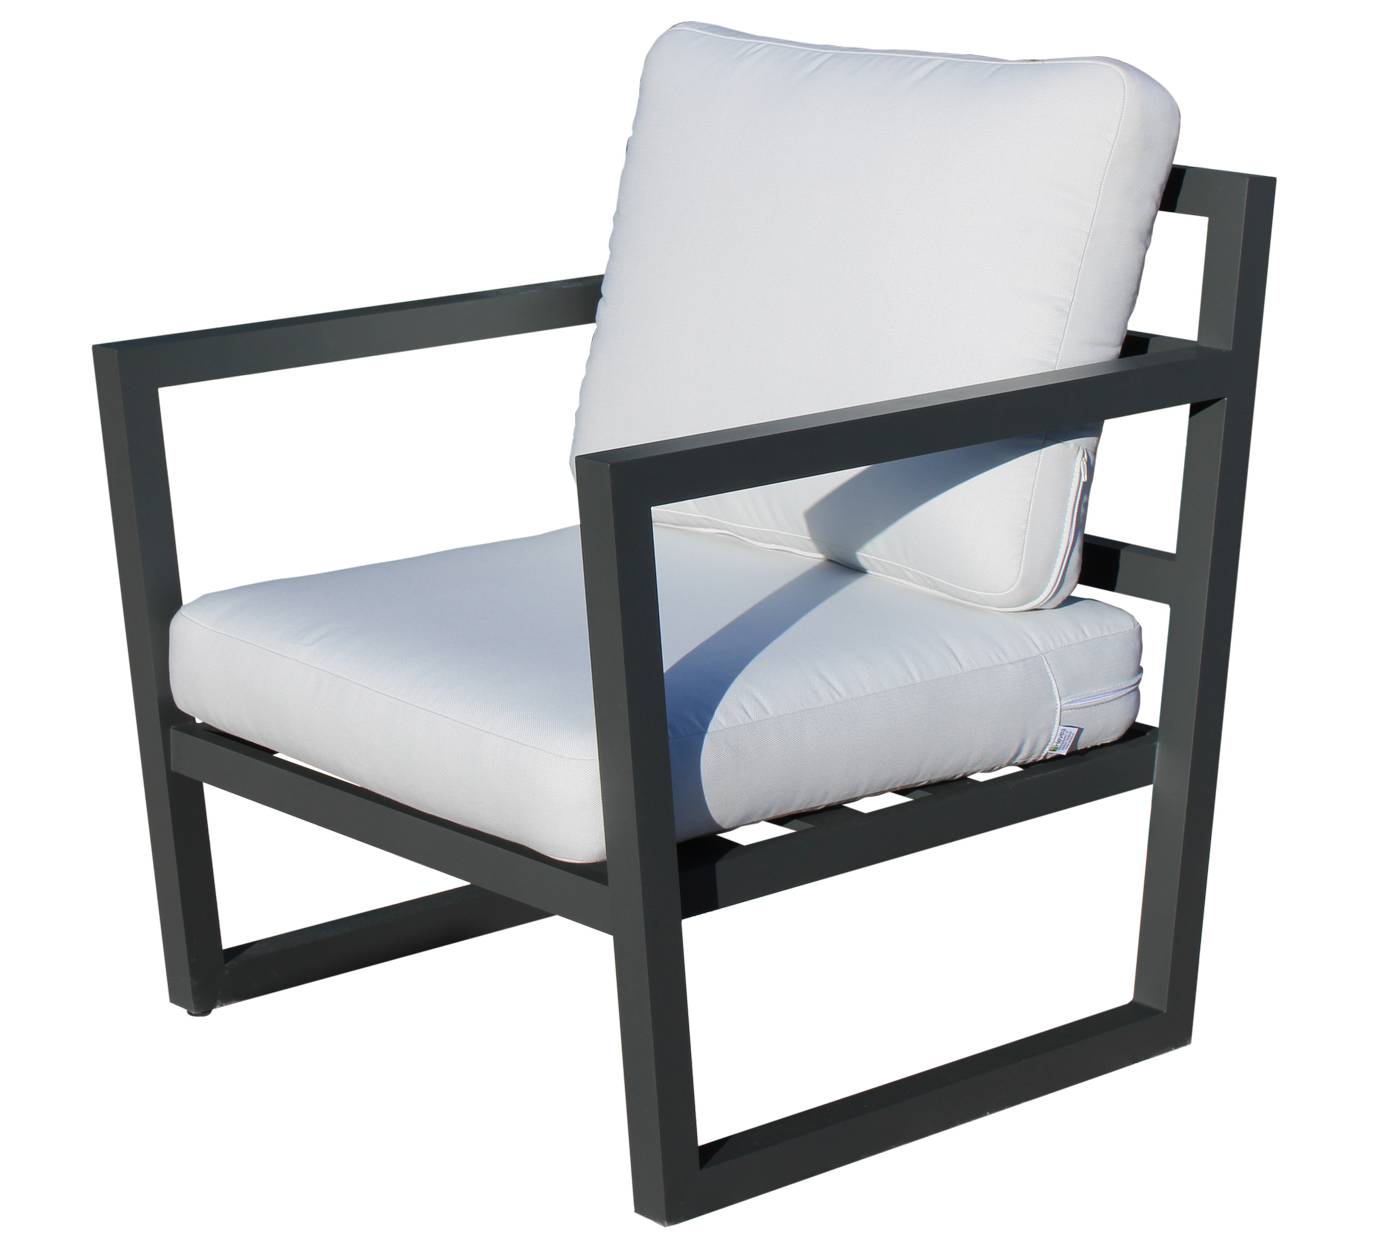 Set Aluminio Piona-10 - Conjunto de aluminio para exterior: sofá 3 plazas + 2 sillones + mesa de centro + 2 taburetes. Disponible en cinco colores diferentes.